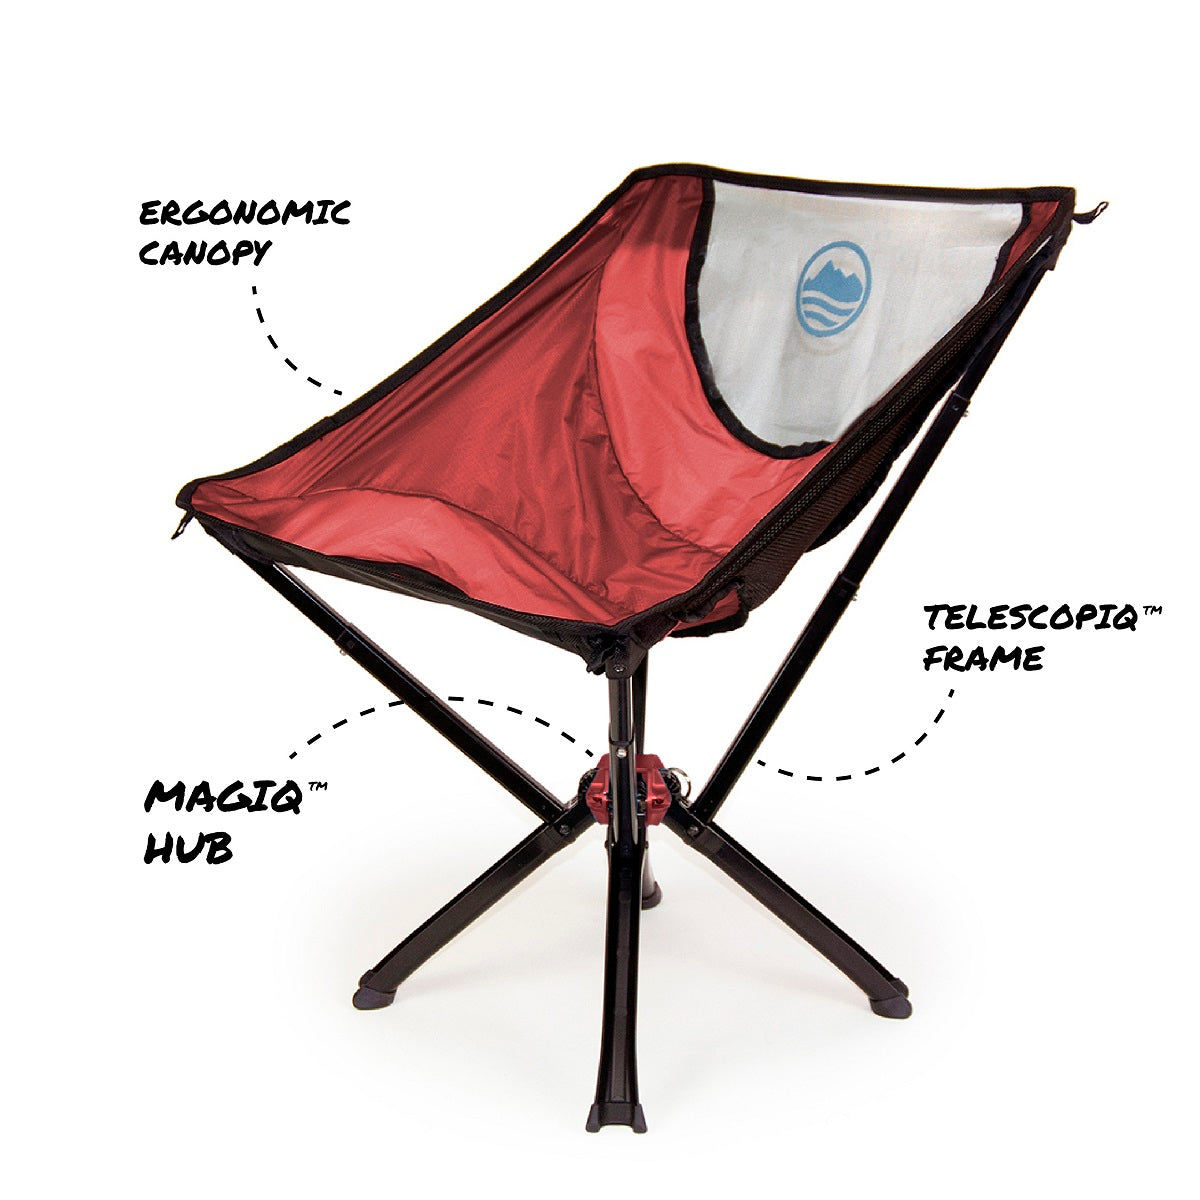 Cliq Chair / Color-Red